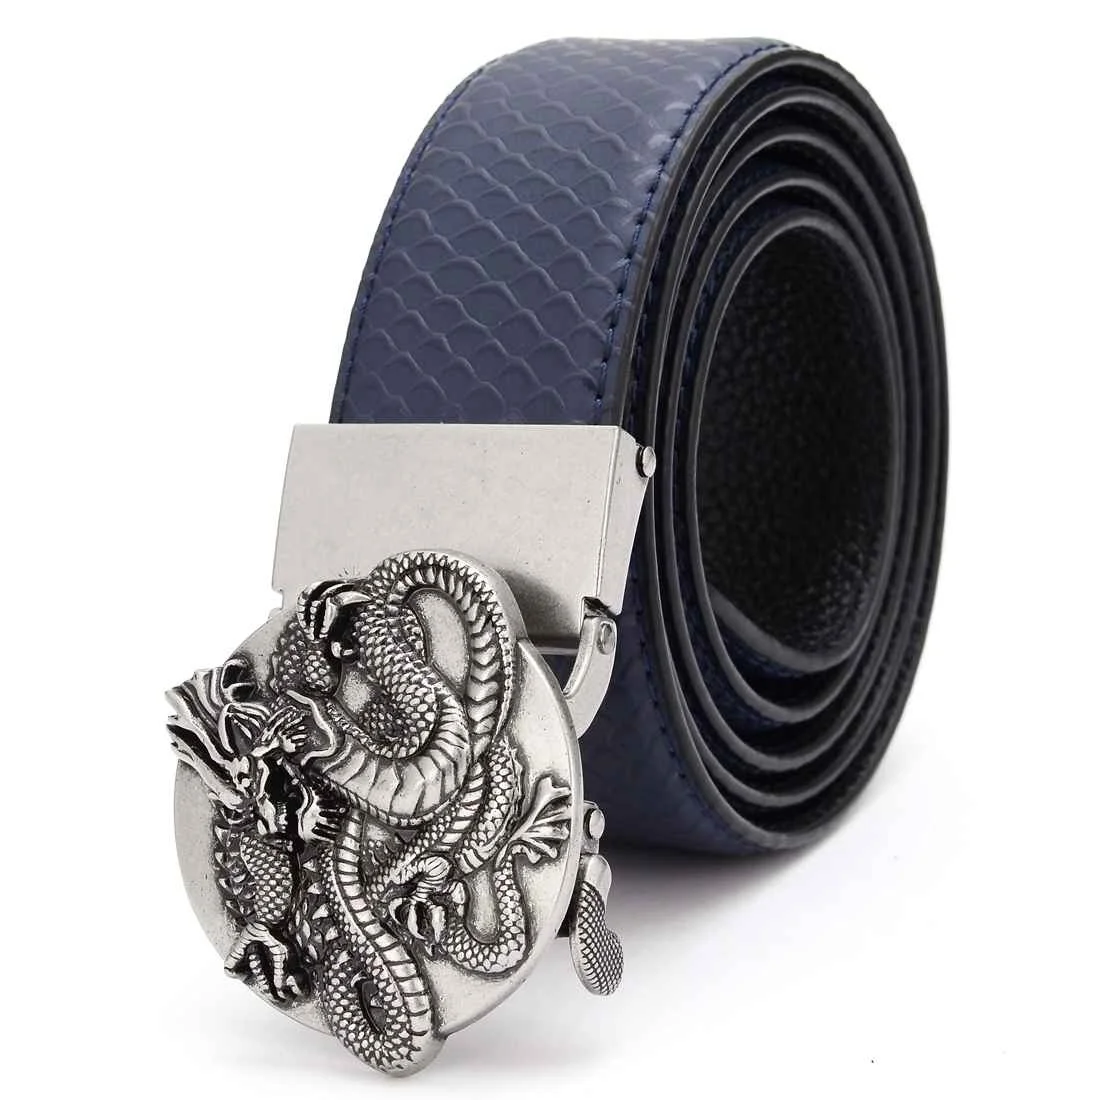 Leather Belts for Men Men's Leather Ratchet Dress Belt Trim To Fit Belt with Automatic Buckle Width:35mm Length:105-120cm